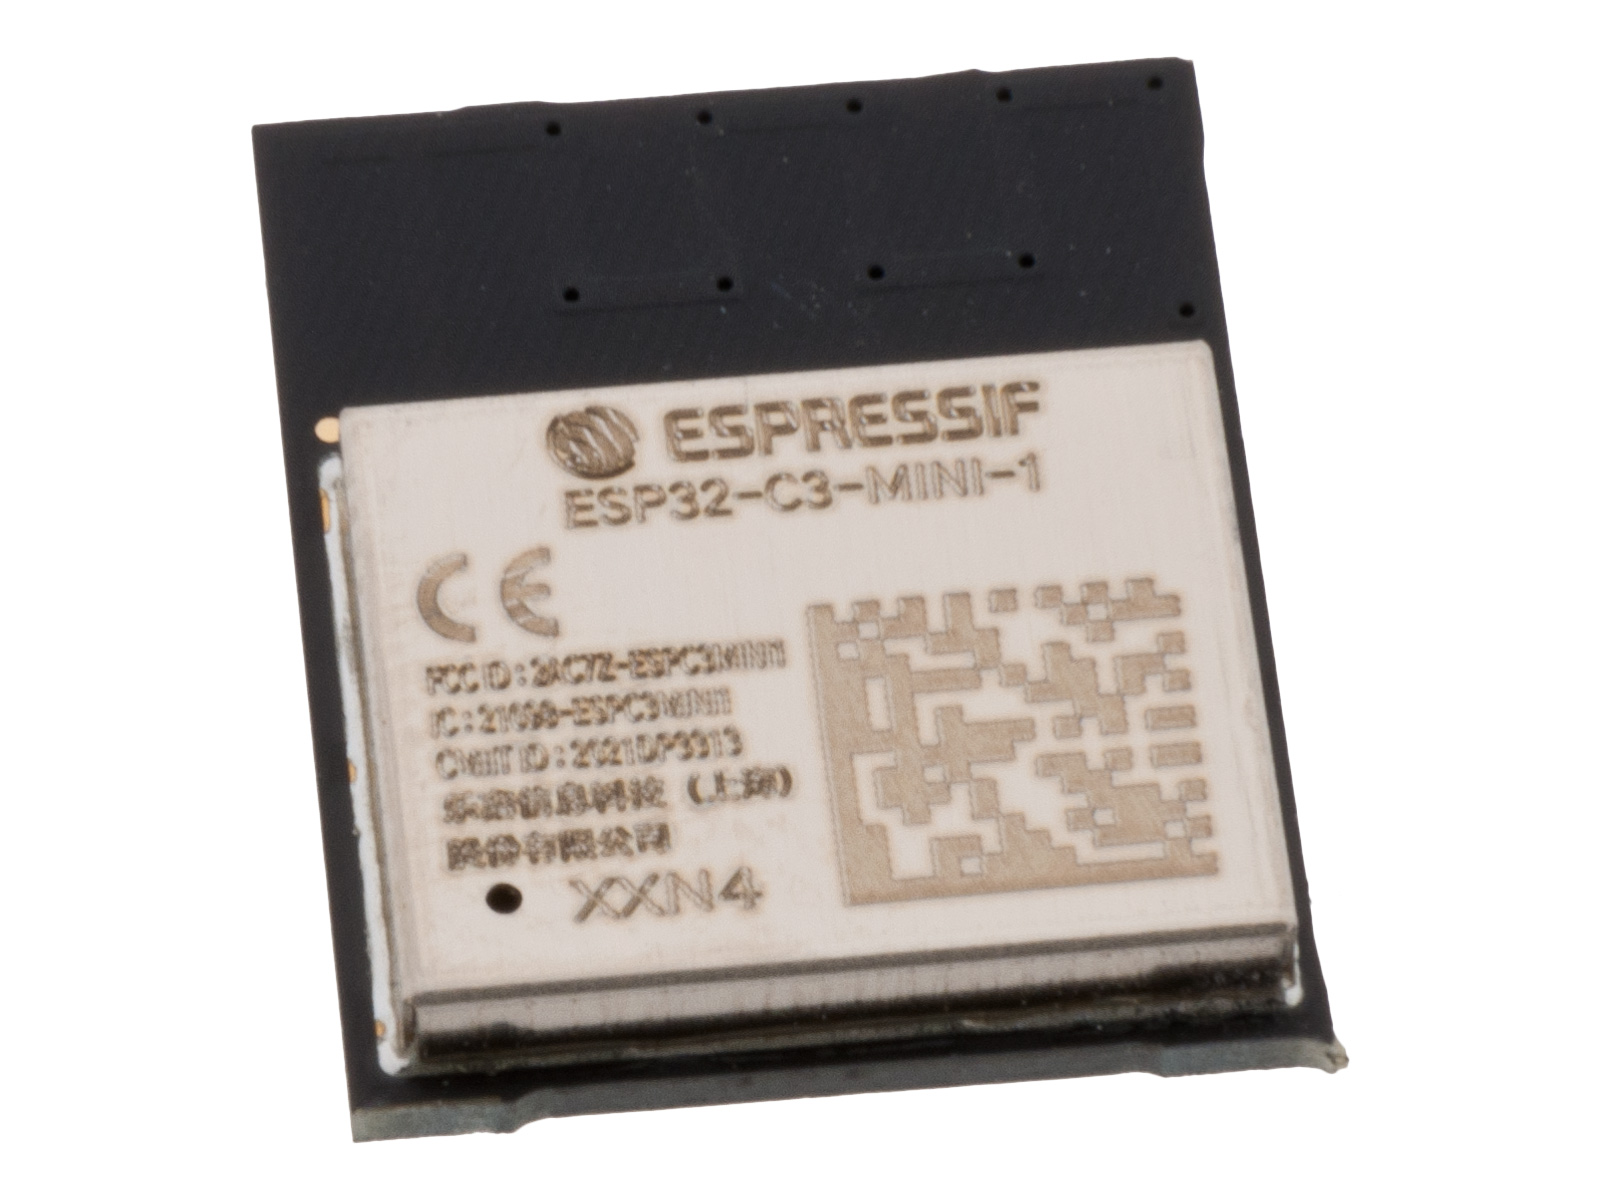 ESP32-C3-MINI-1-N4 RISC-V WIFI/BLE Modul @ electrokit